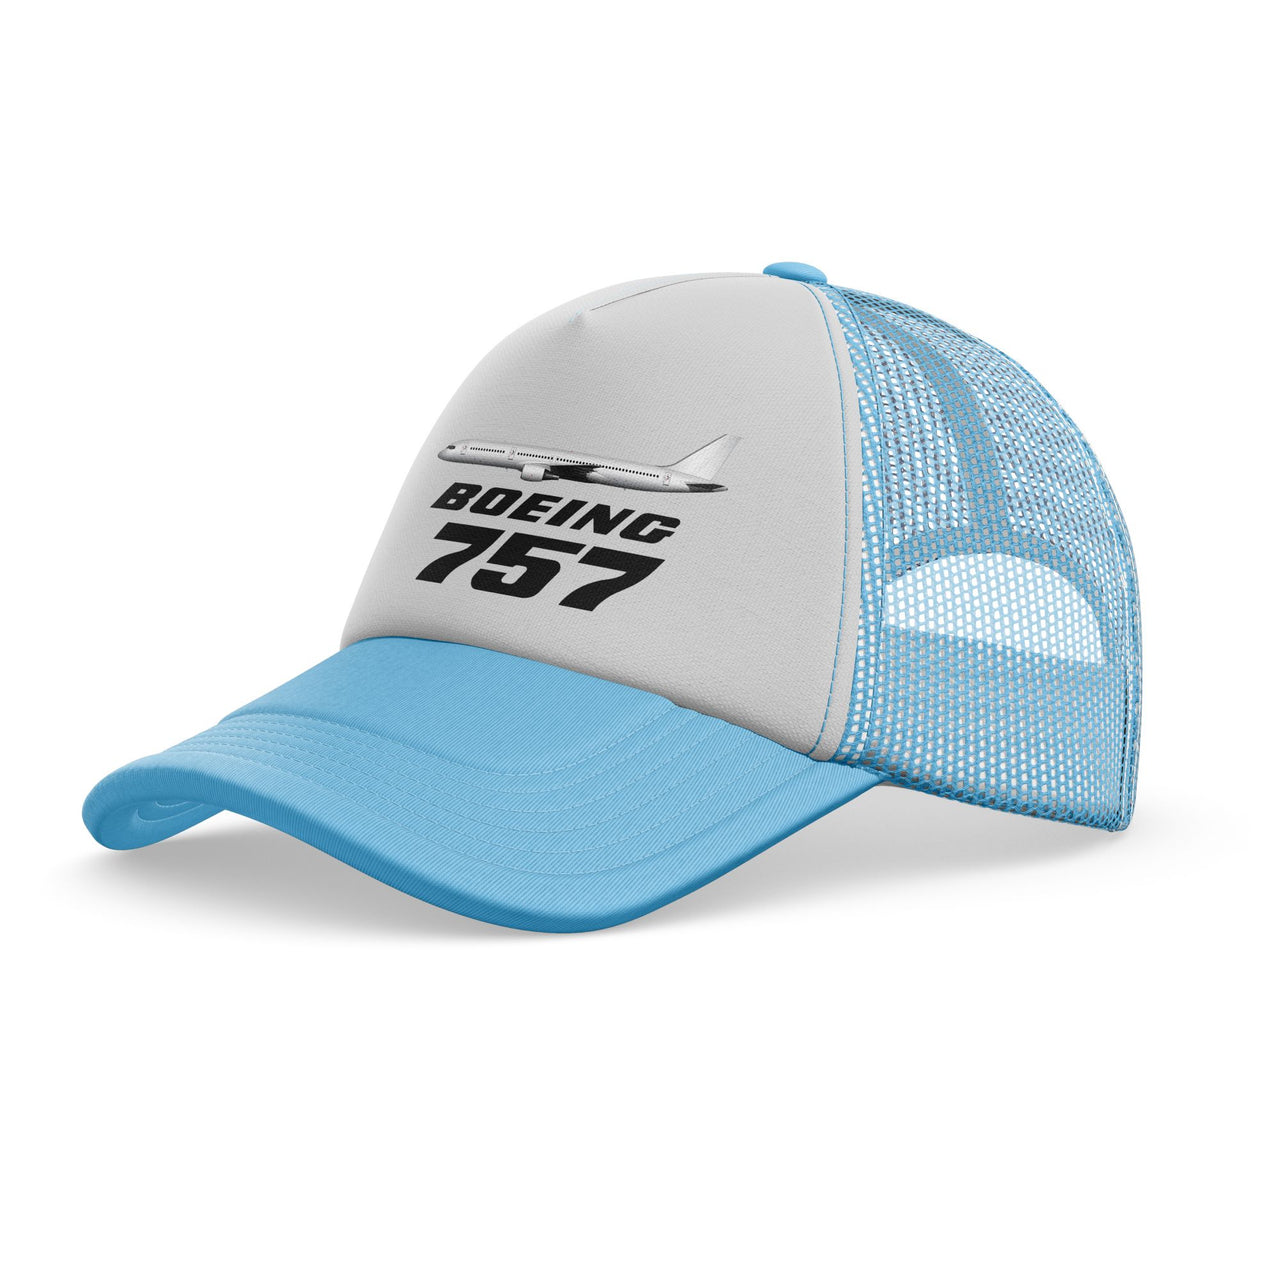 The Boeing 757 Designed Trucker Caps & Hats